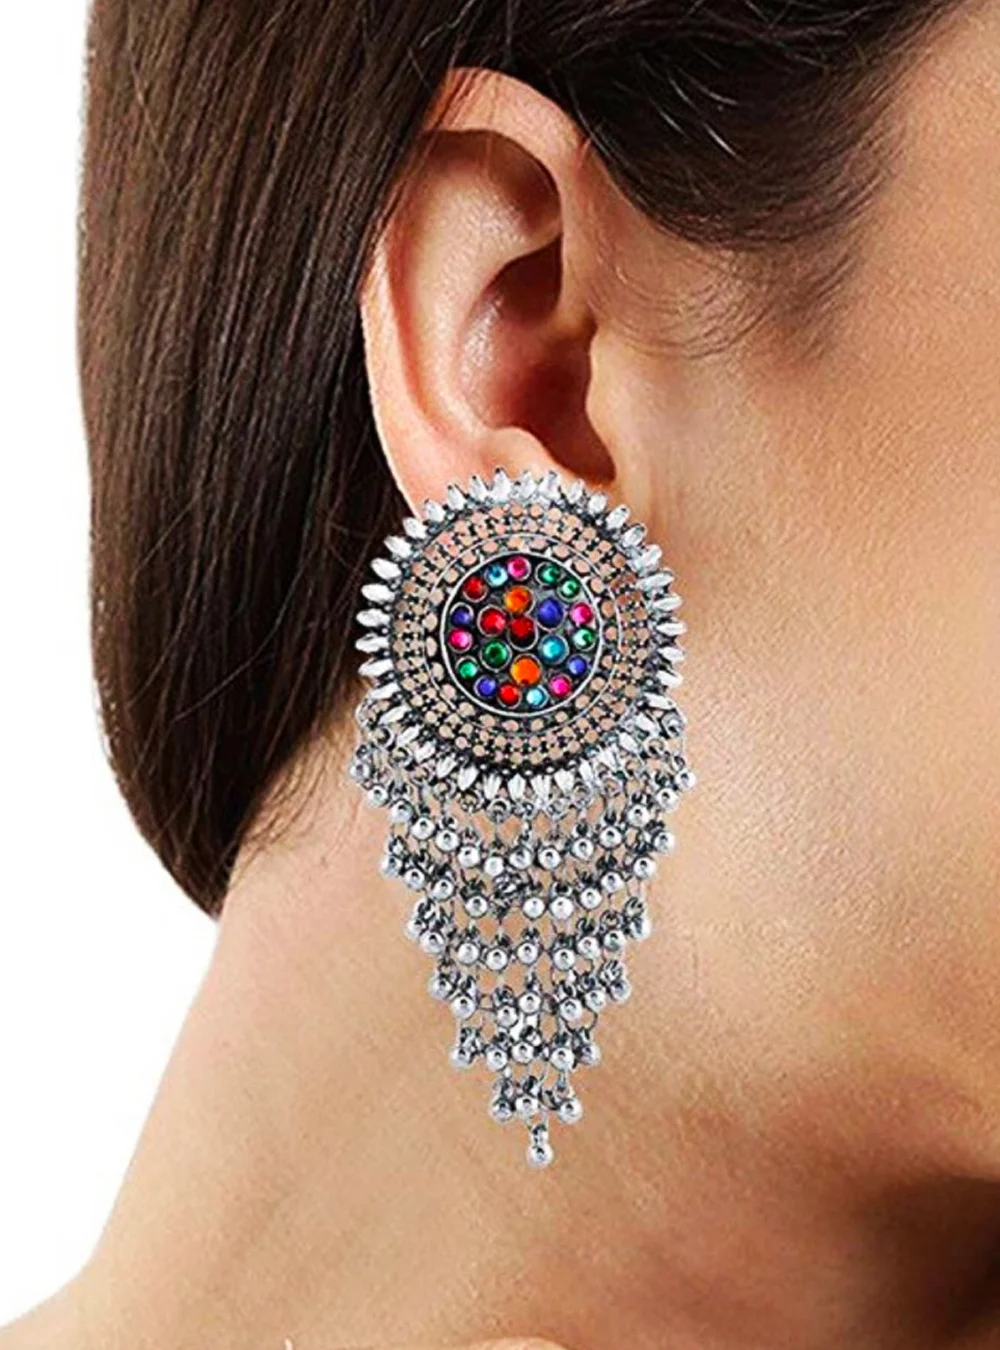 Buy Black Earrings for Women by The Pari Online | Ajio.com